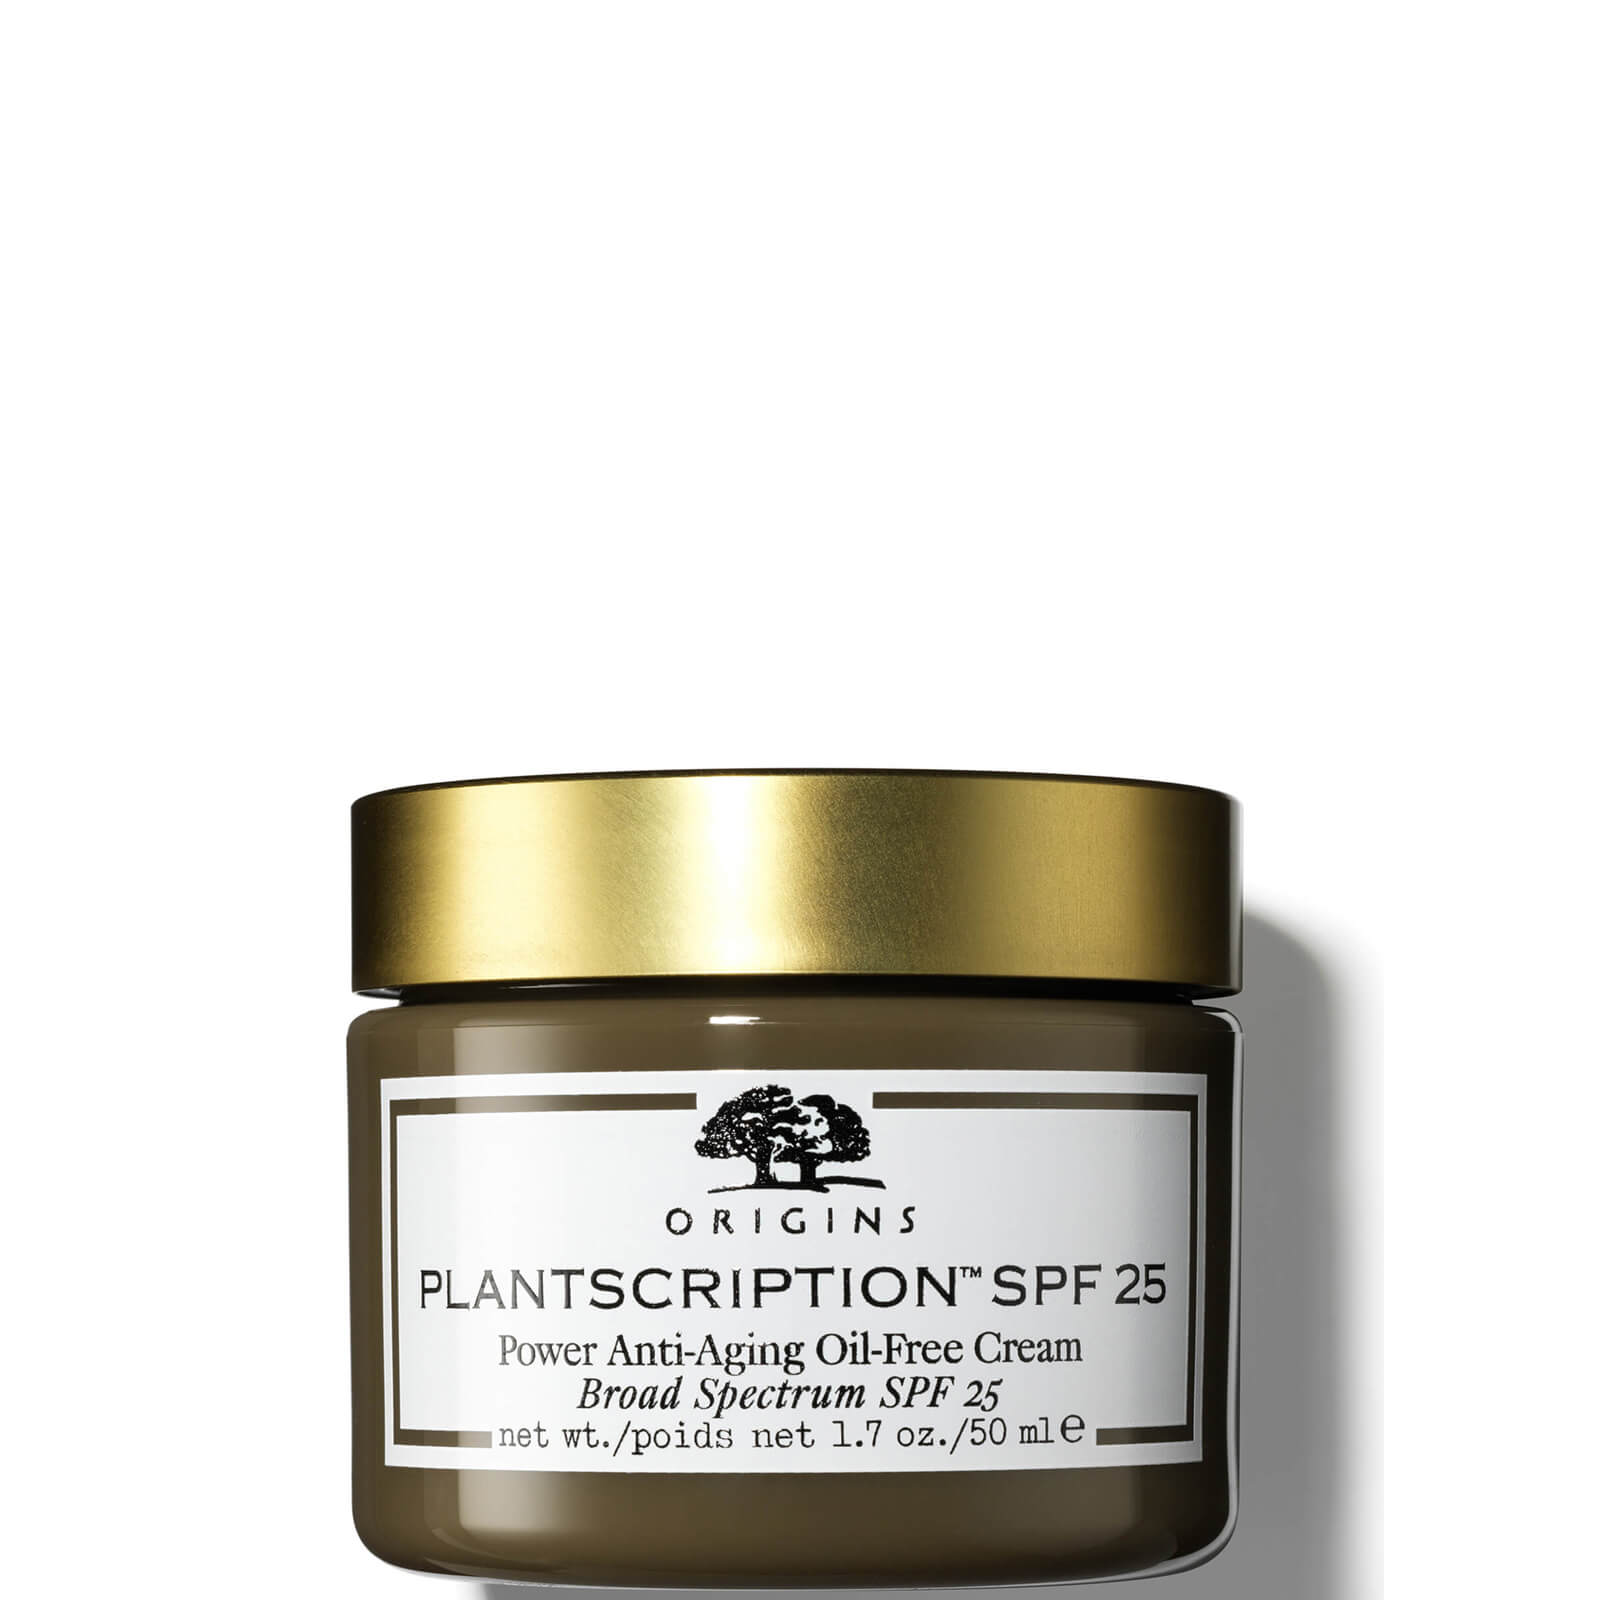 Origins Plantscriptiontm SPF 25 Power Anti-Ageing Oil-Free Cream 50ml